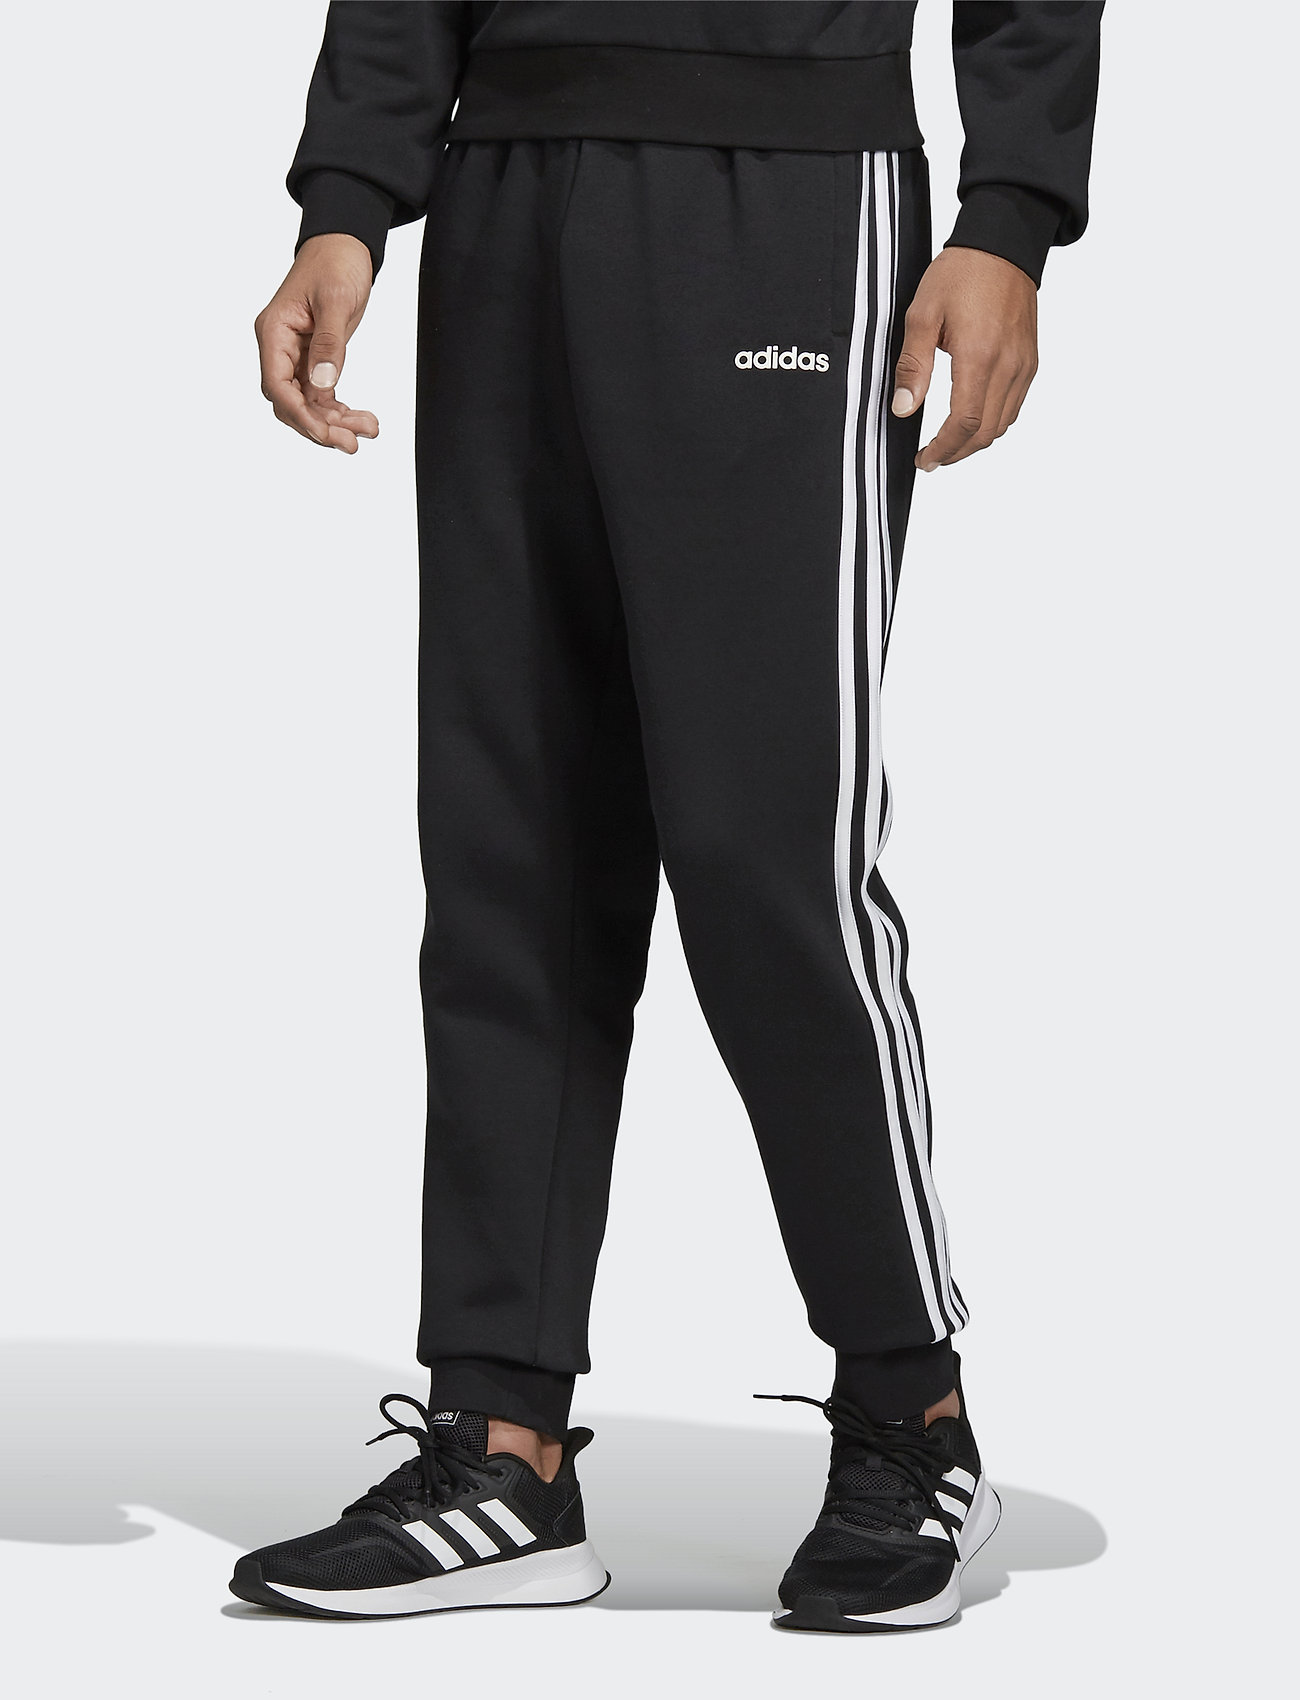 18+ Adidas Sweatpants Black And White Background